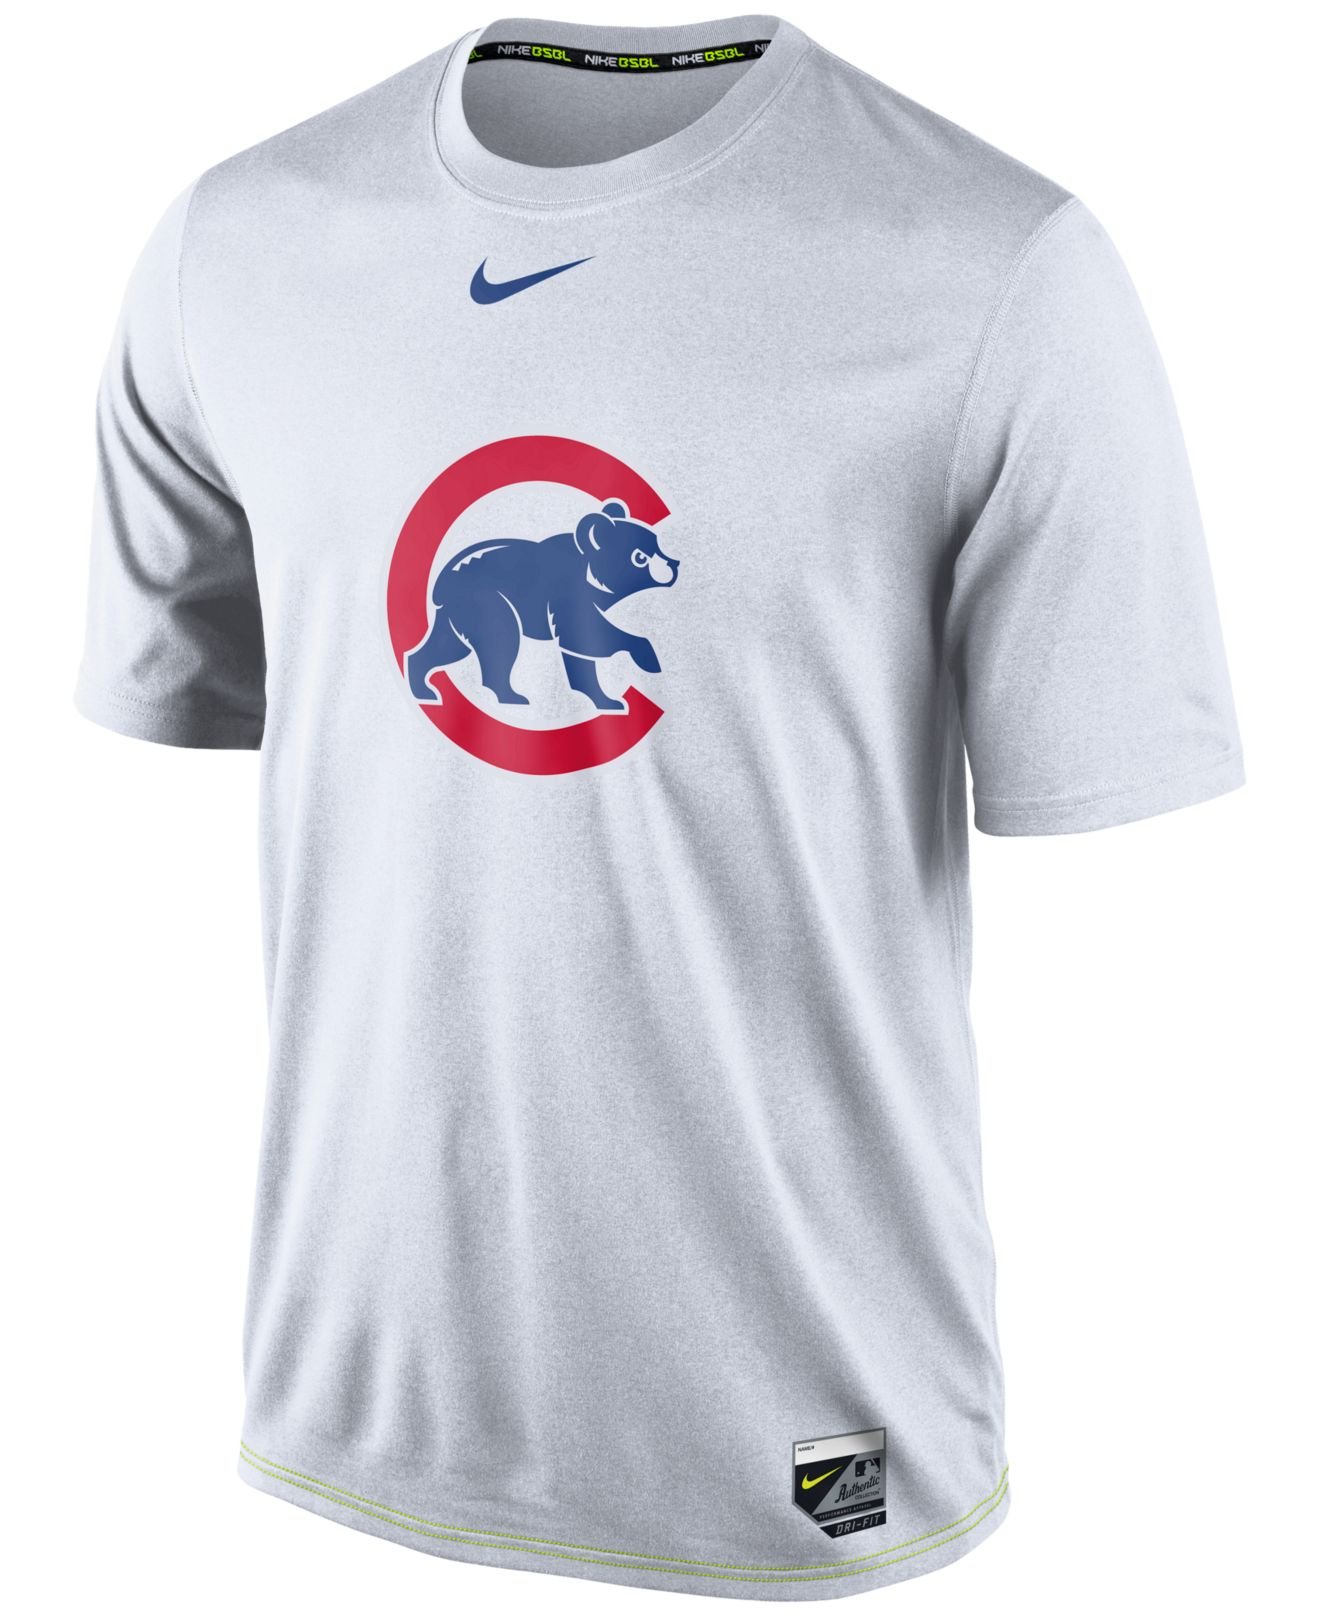 Lyst - Nike Men'S Chicago Cubs Dri-Fit Legend T-Shirt in White for Men